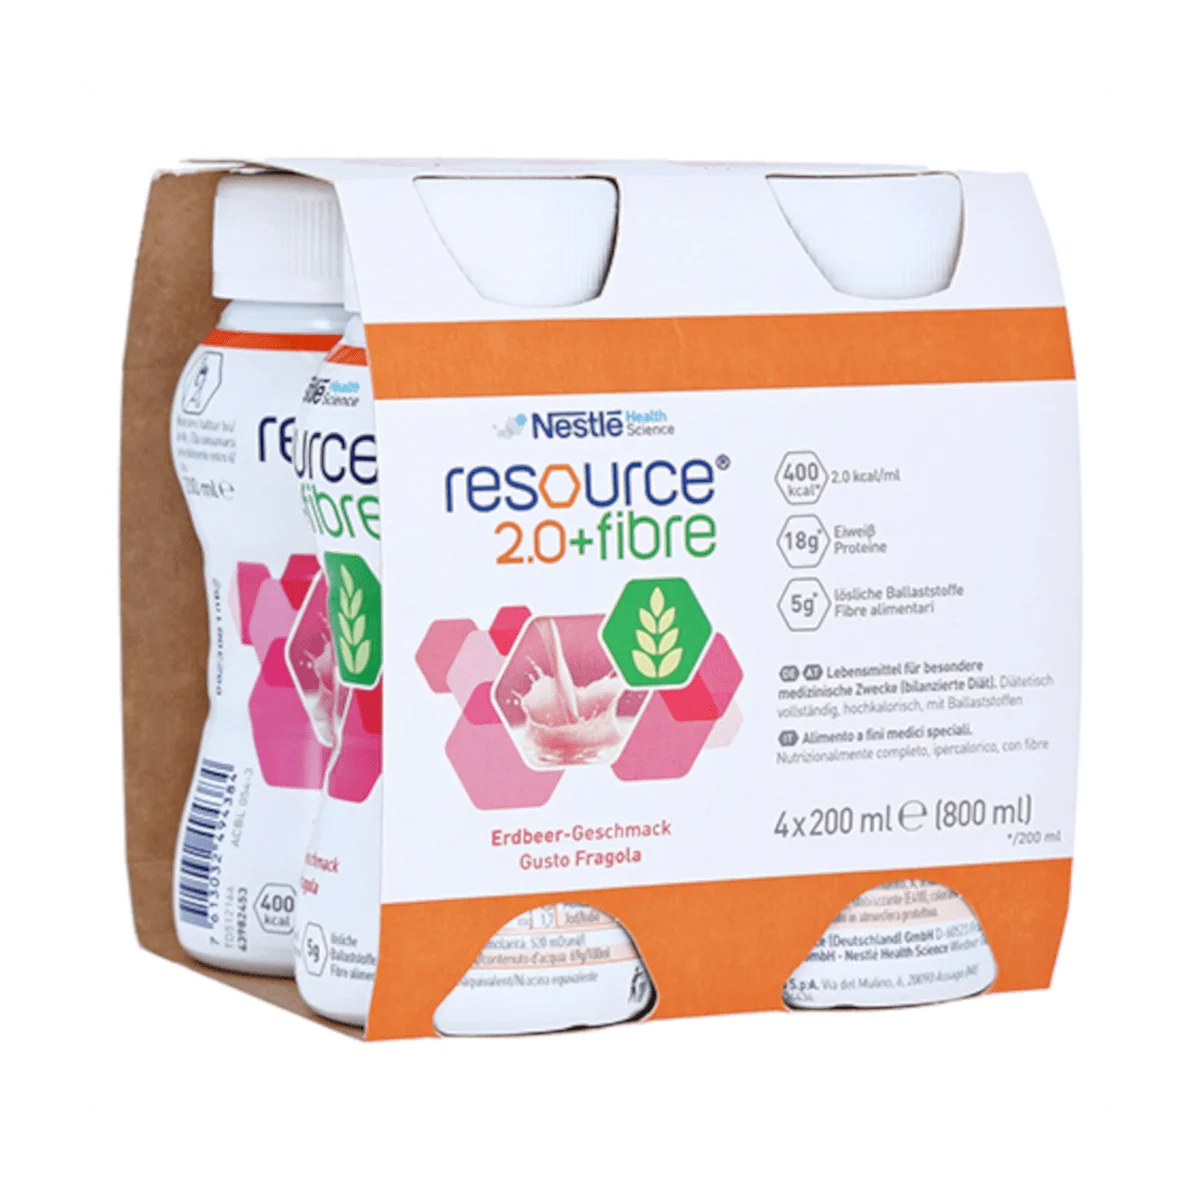 Nestlé Resource 2.0 + fibre Erdbeere, 4x200 ml